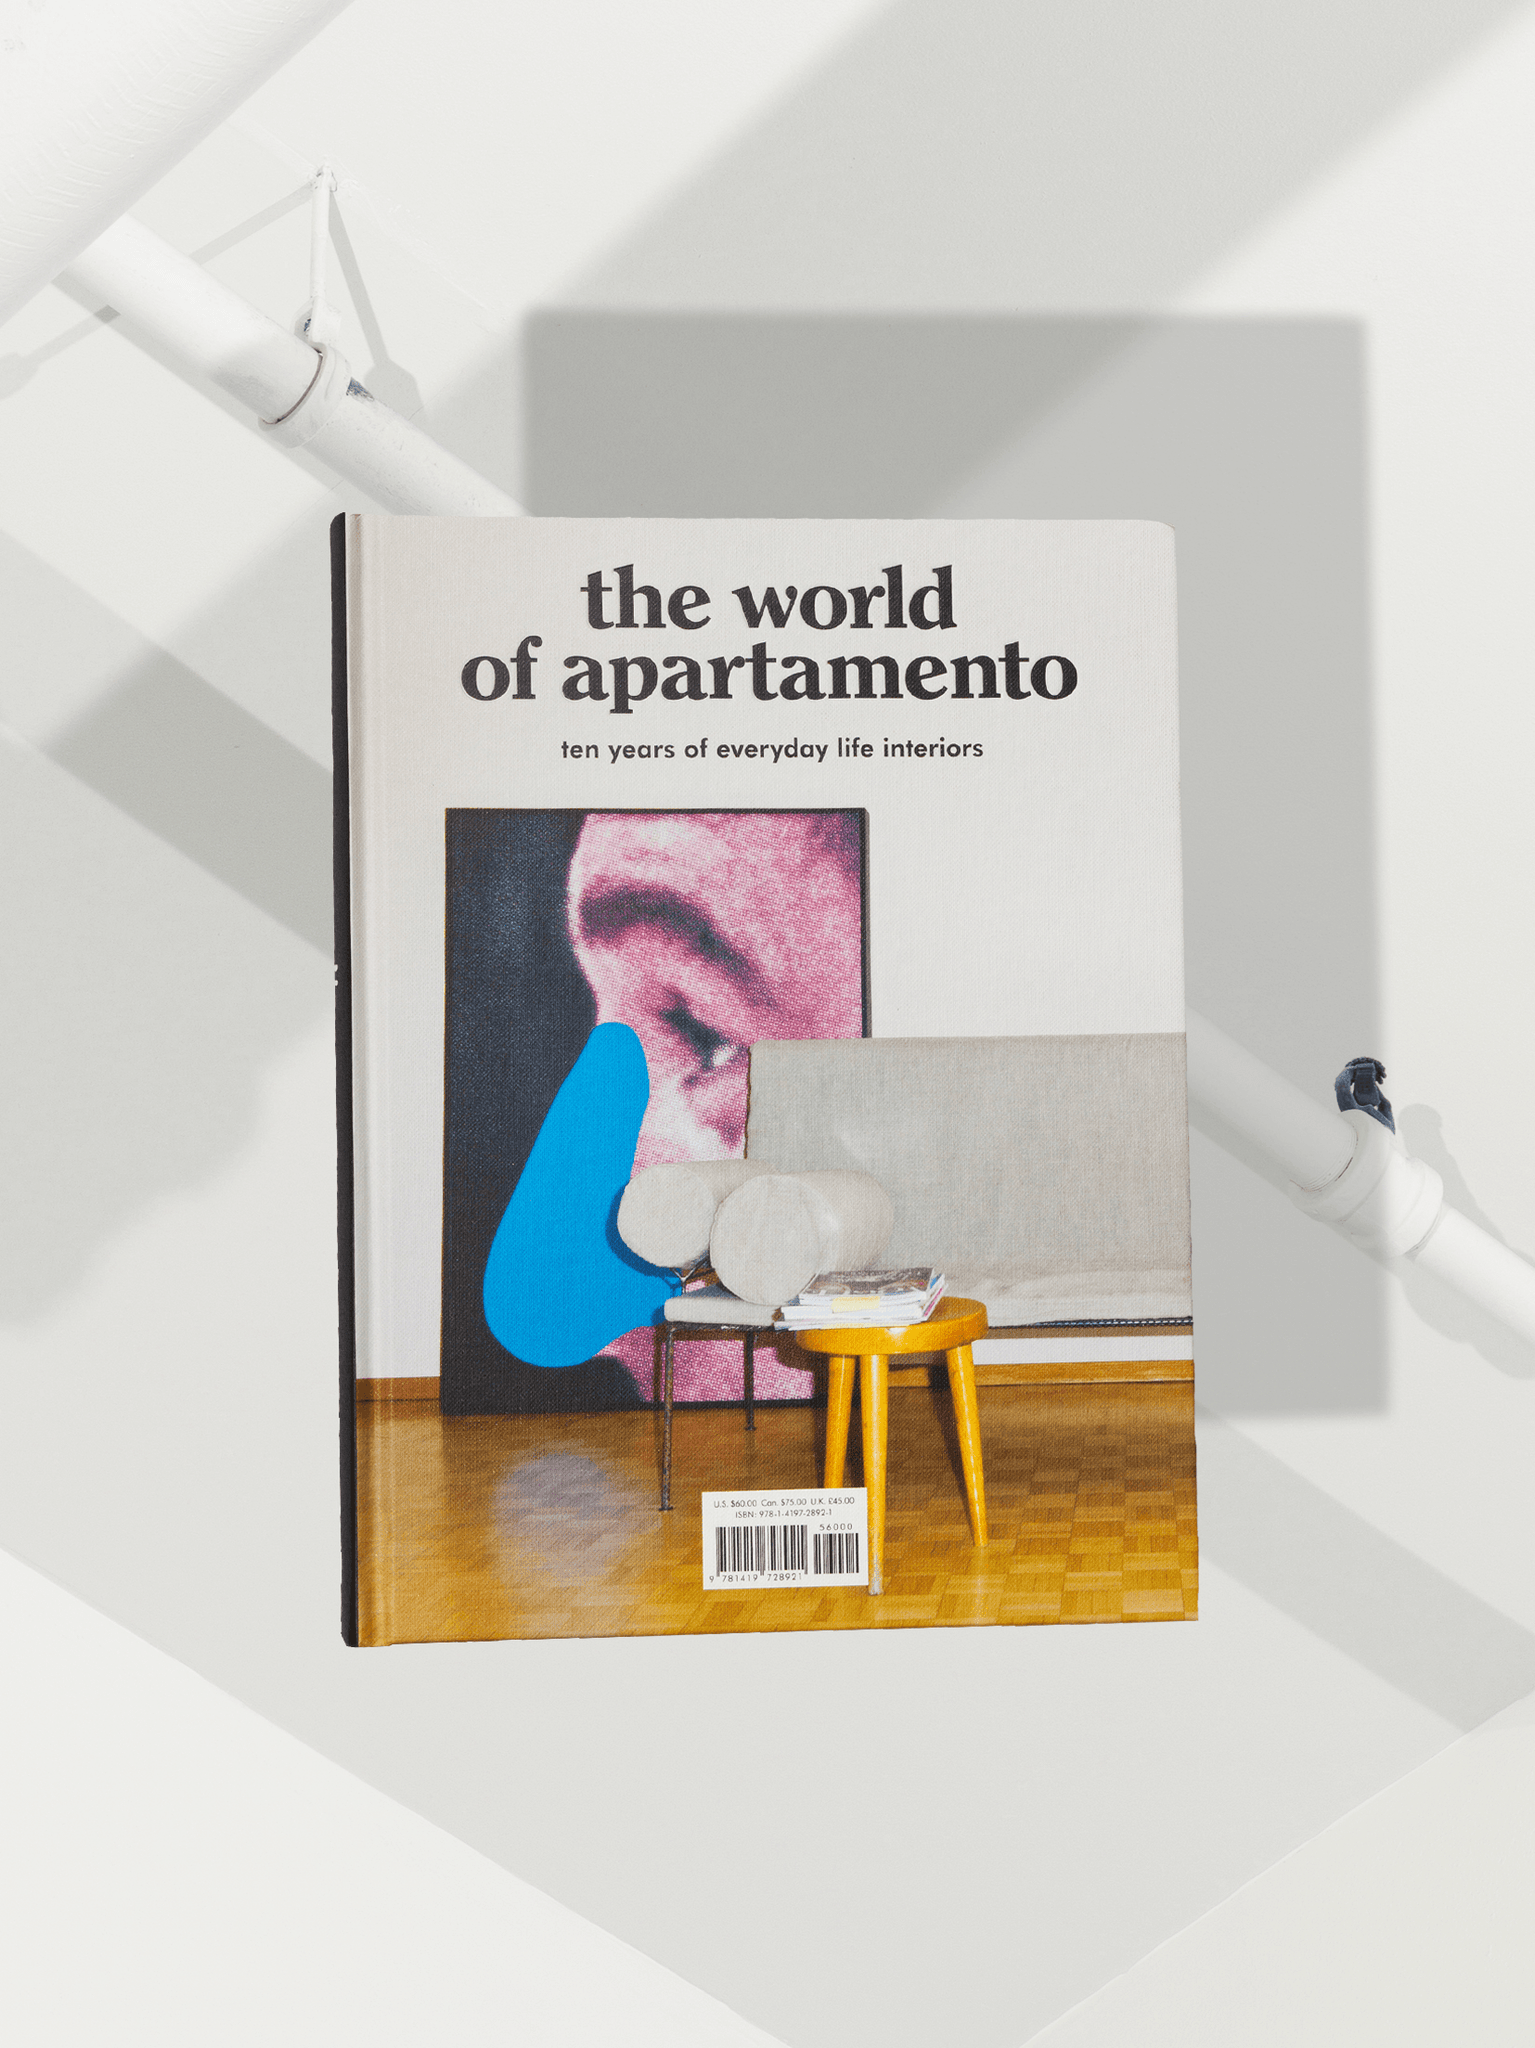 Bi-Rite Studio The World of Apartamento 10 Years of Everyday Life Interiors ISBN 1-4197-2892-X Book